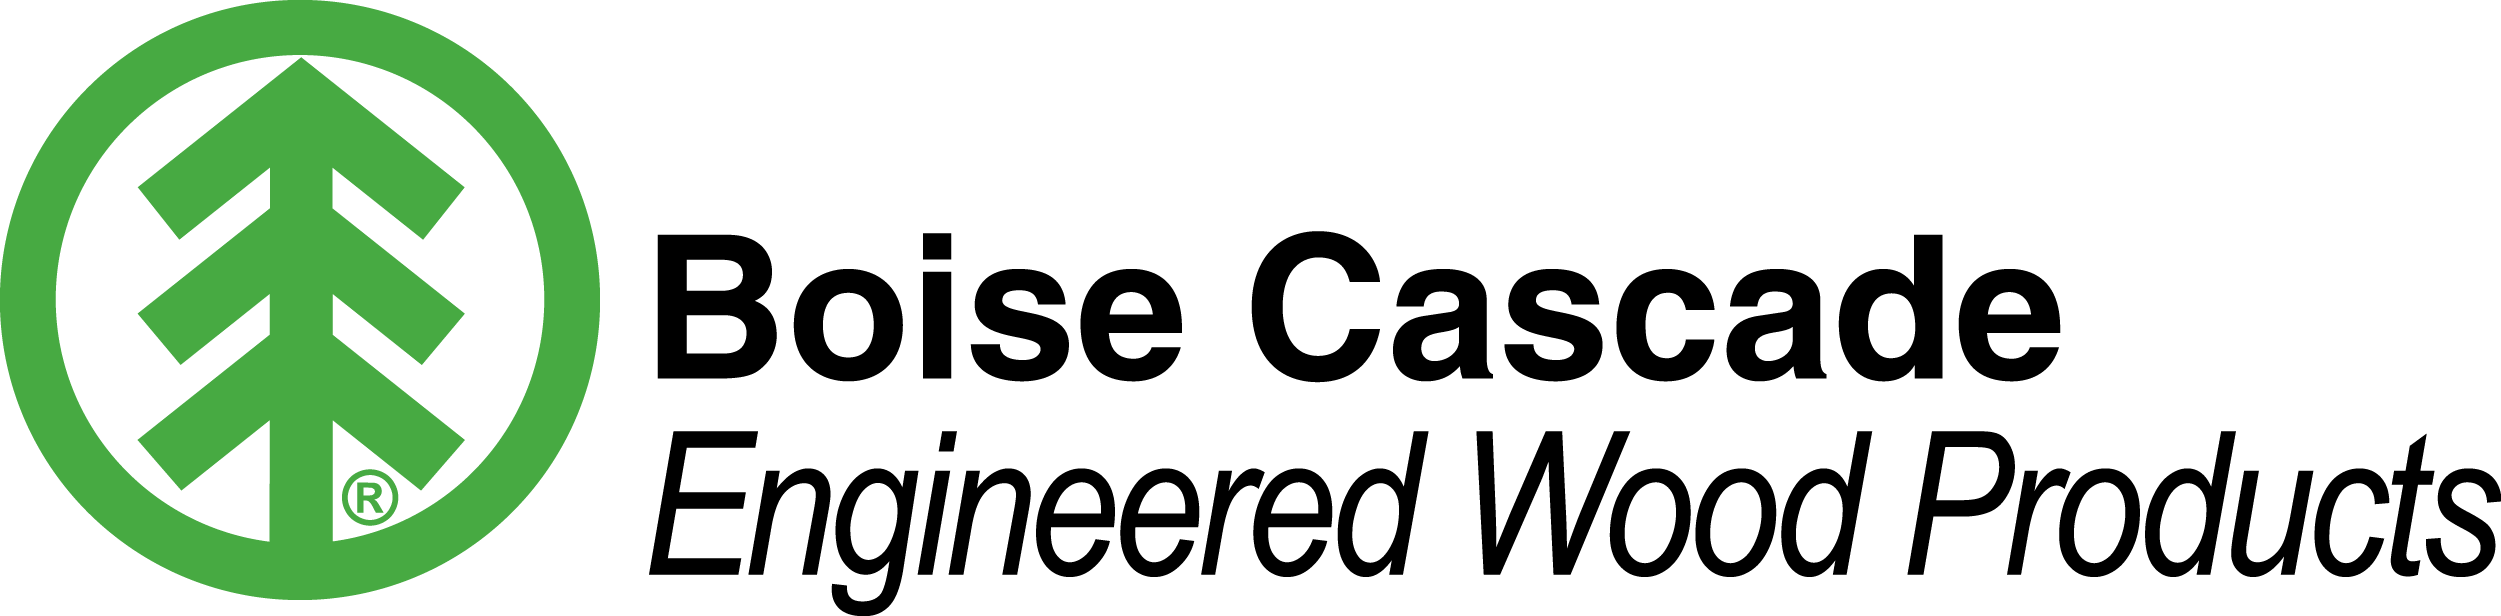 Boise_BC-logo-362-EWP-outline-2013